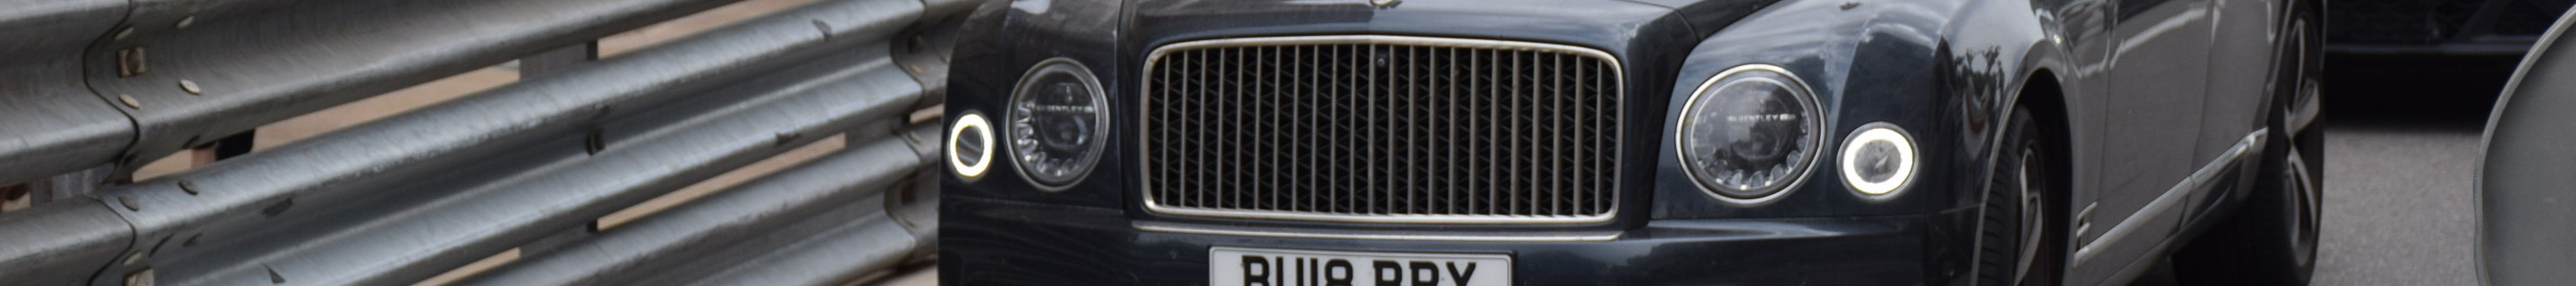 Bentley Mulsanne Speed 2016